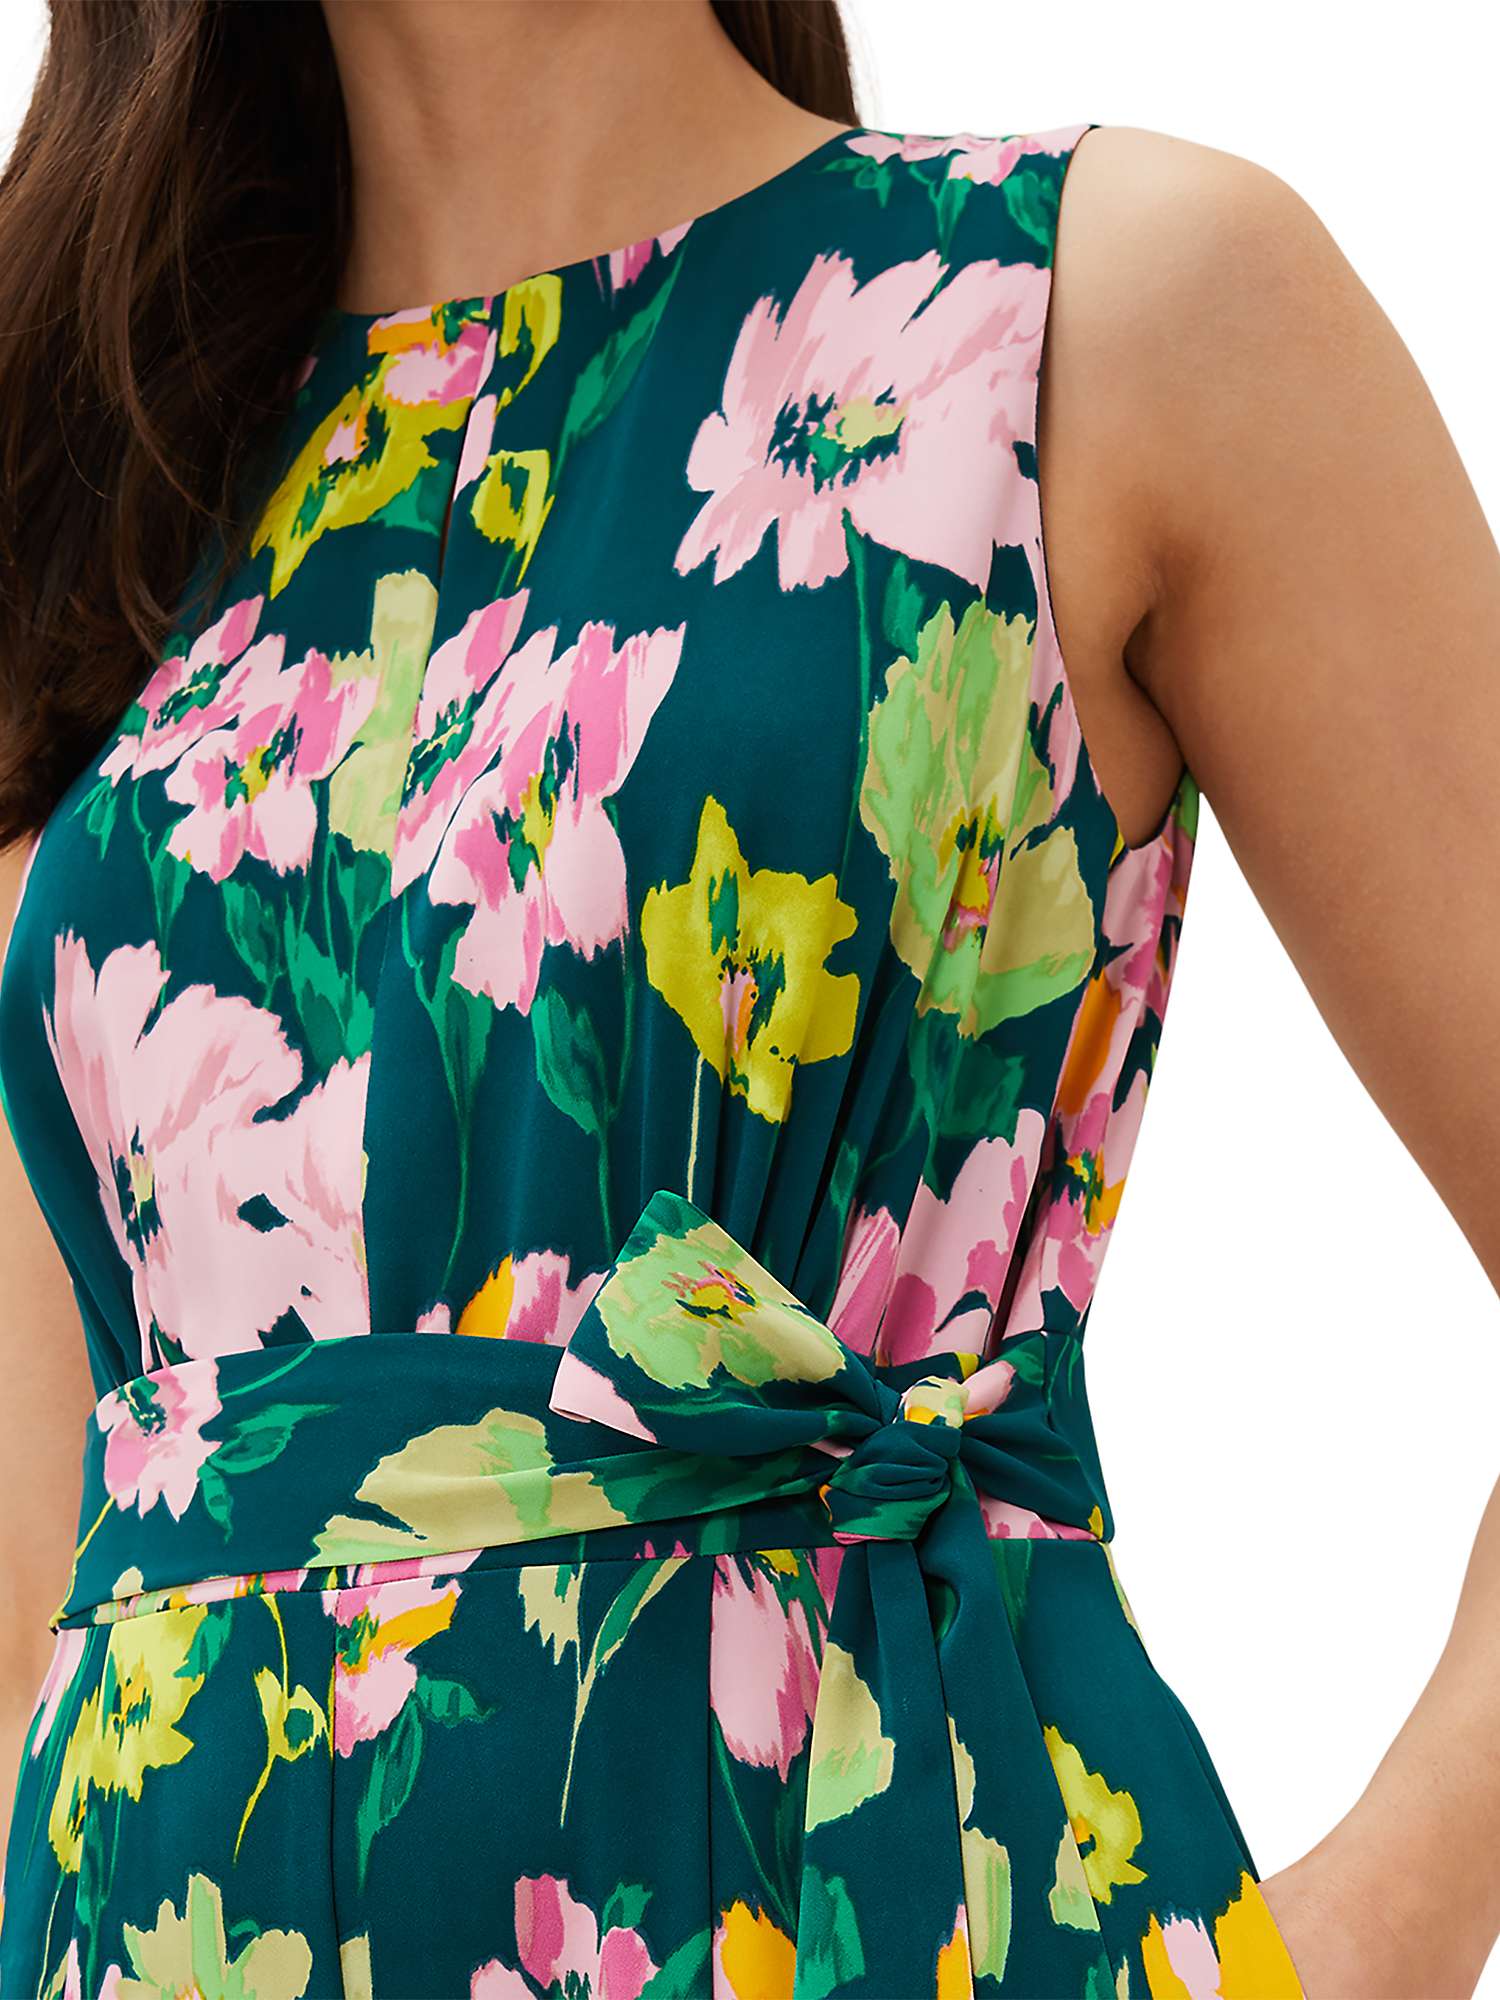 Buy Phase Eight Effie Floral Jumpsuit, Teal/Multi Online at johnlewis.com